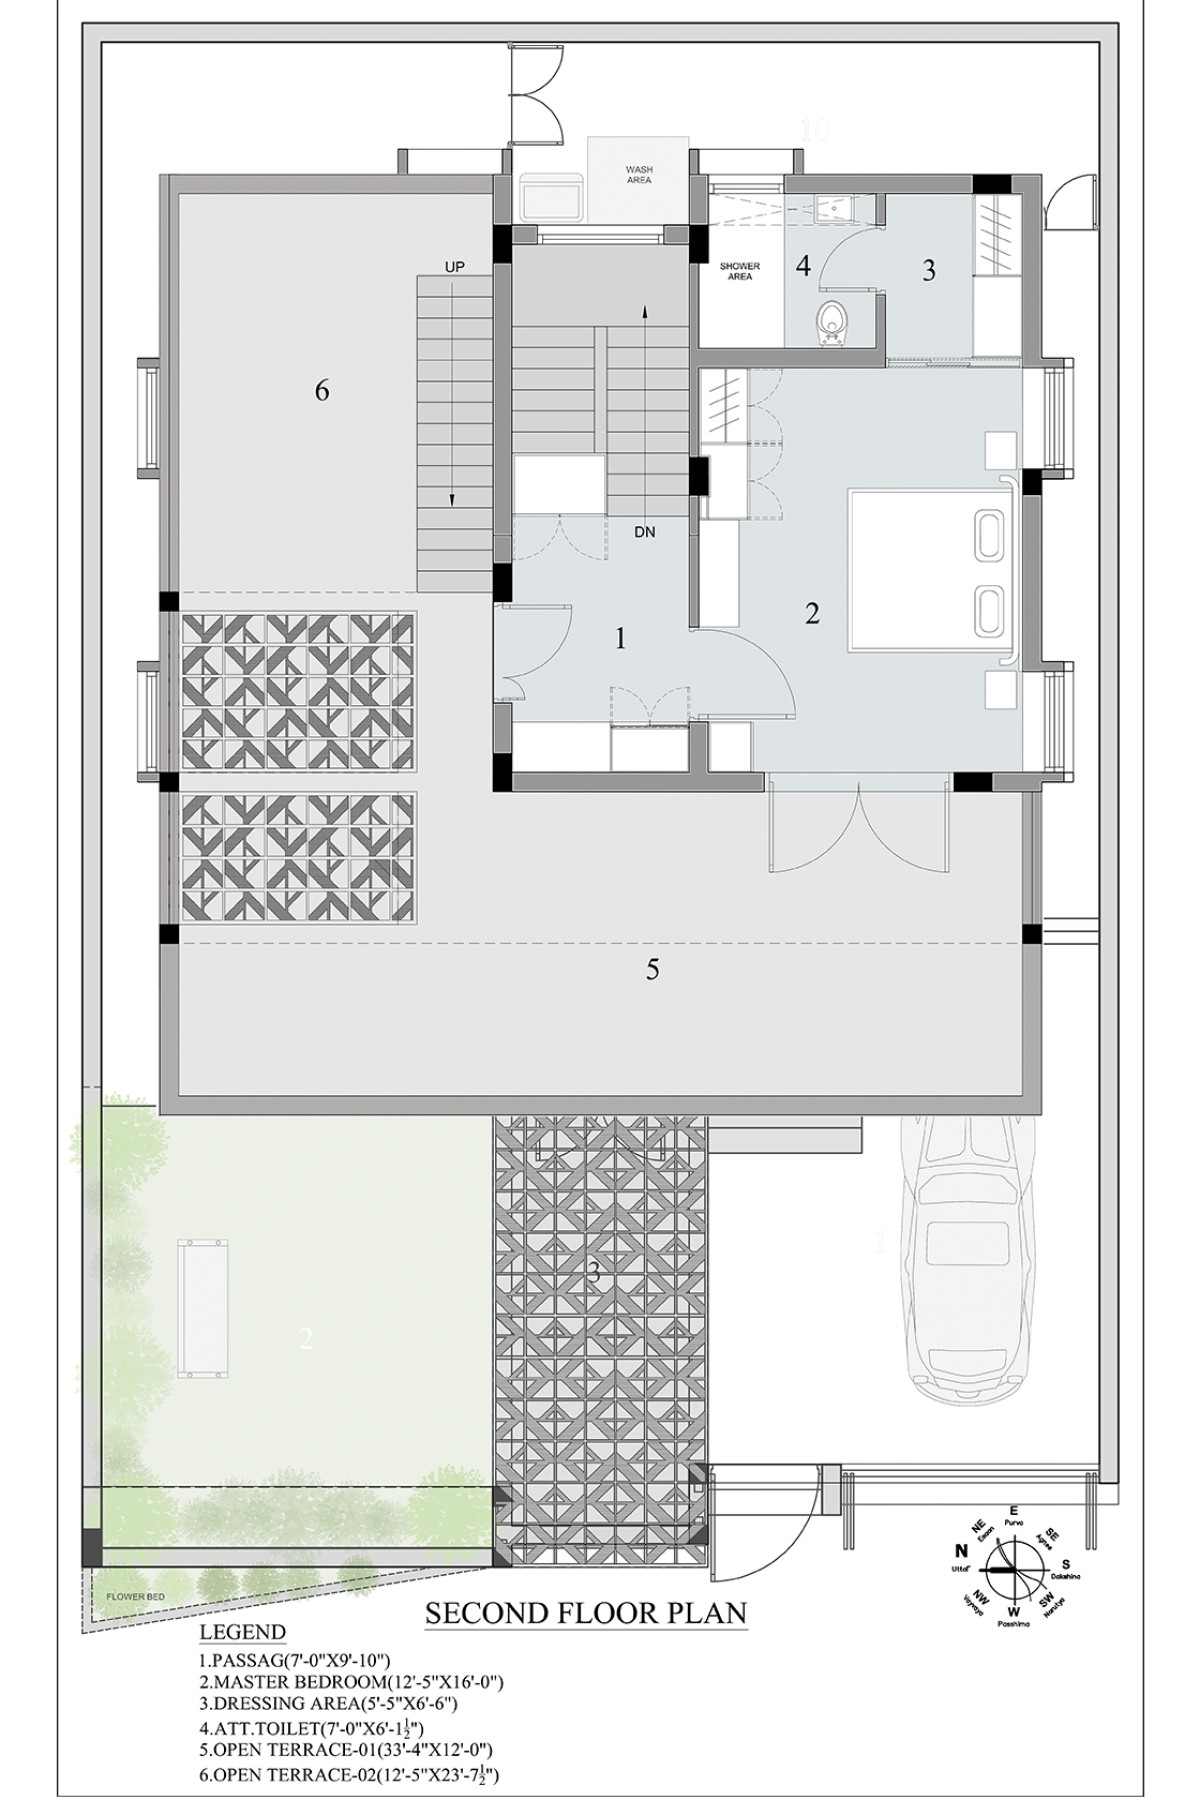 Second floor plan of Terracotta Screen House by Zzarna Sstudio